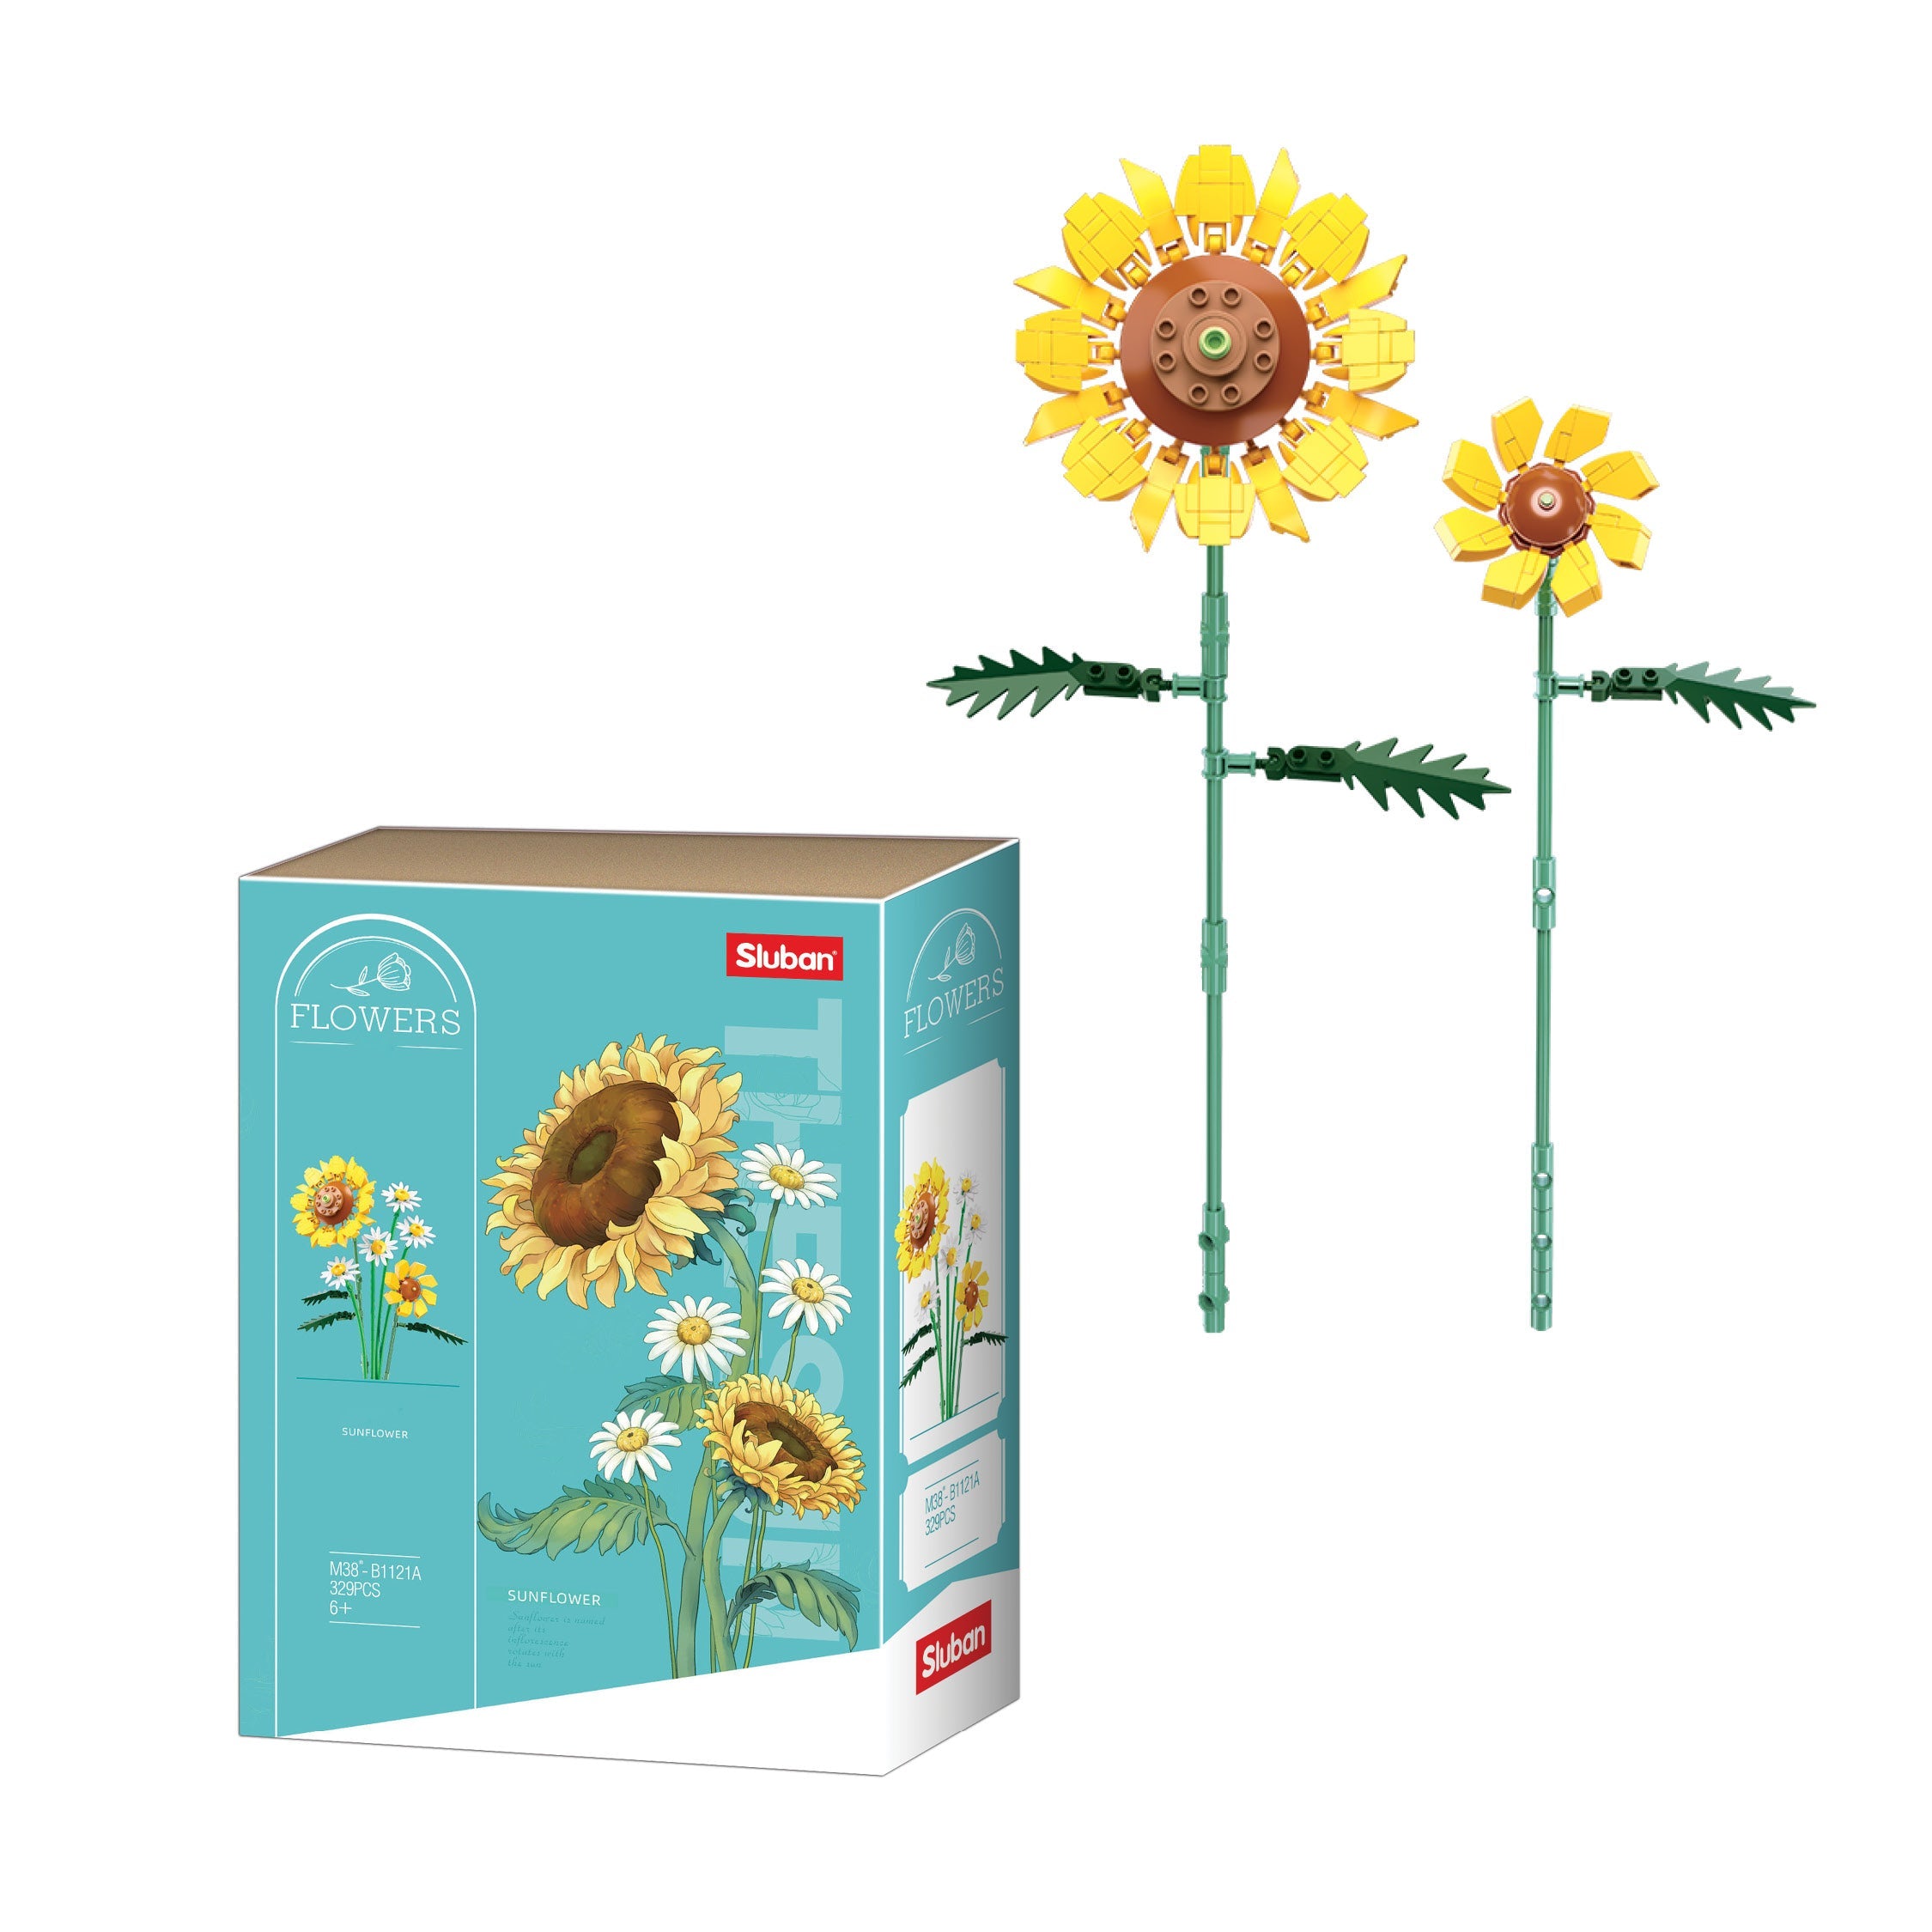 Sluban Flowers - Sunflower Building Blocks For Ages 6+